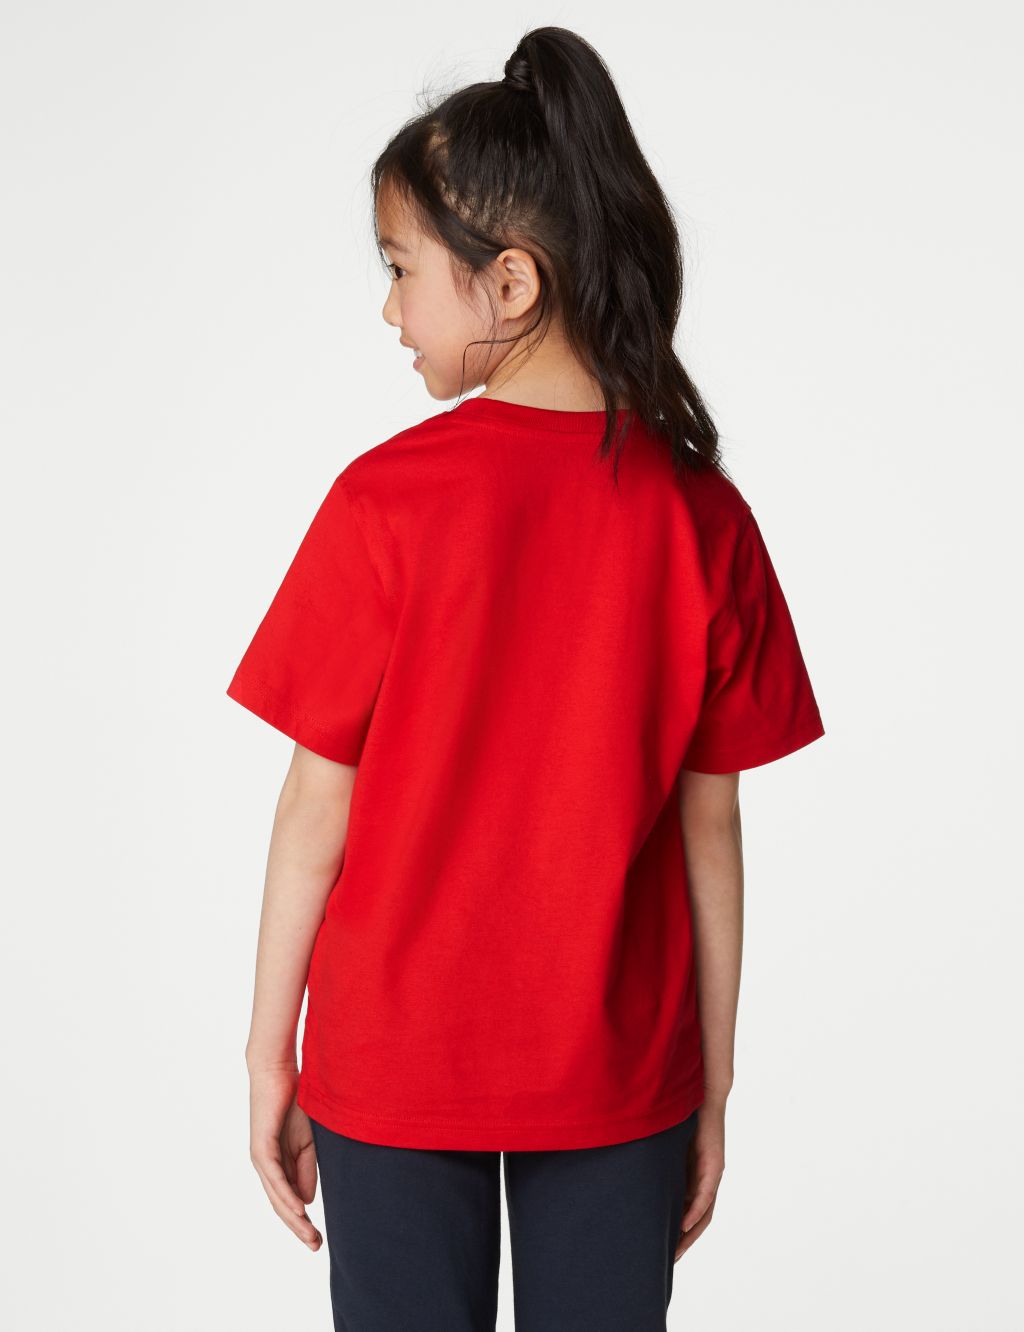 Unisex Pure Cotton School T-Shirt (2-16 Yrs) image 4